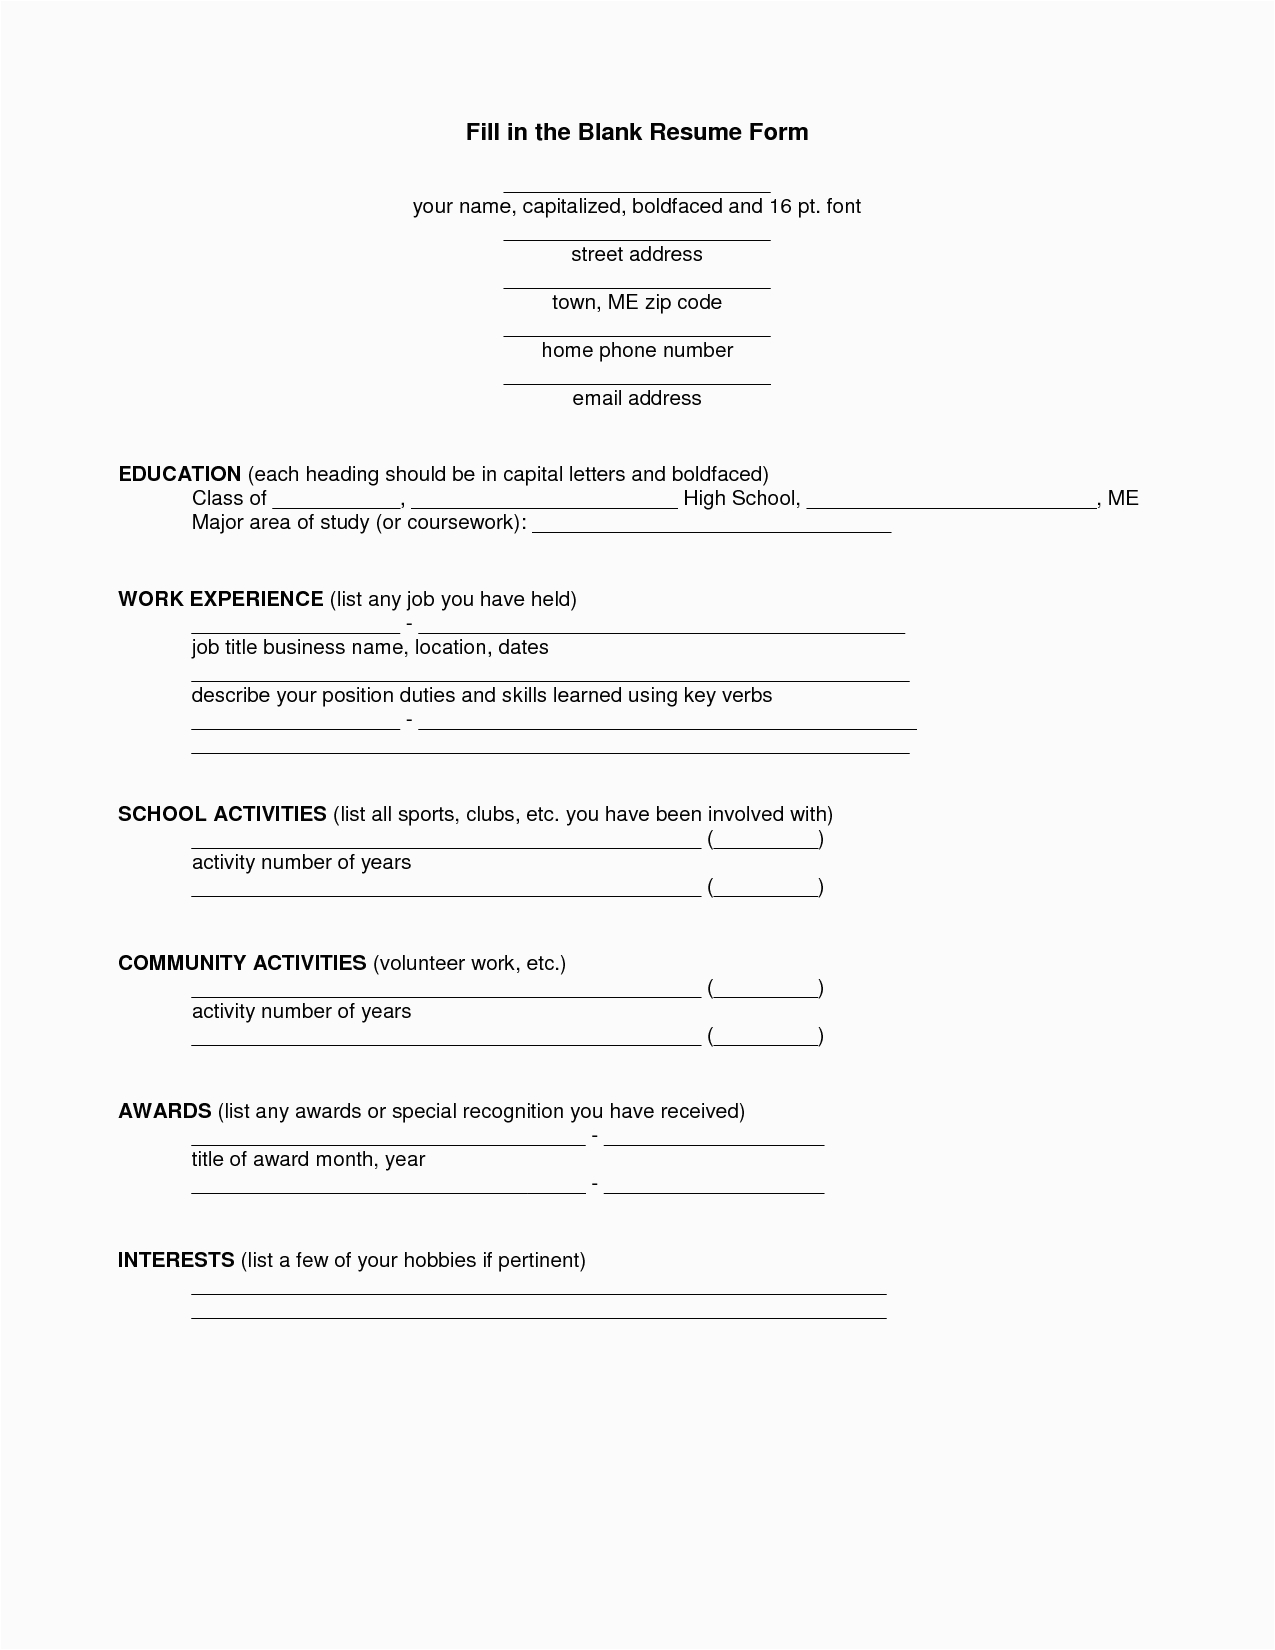 Resume Fill In the Blank Template 12 Best Of Printable Resume Worksheet Free